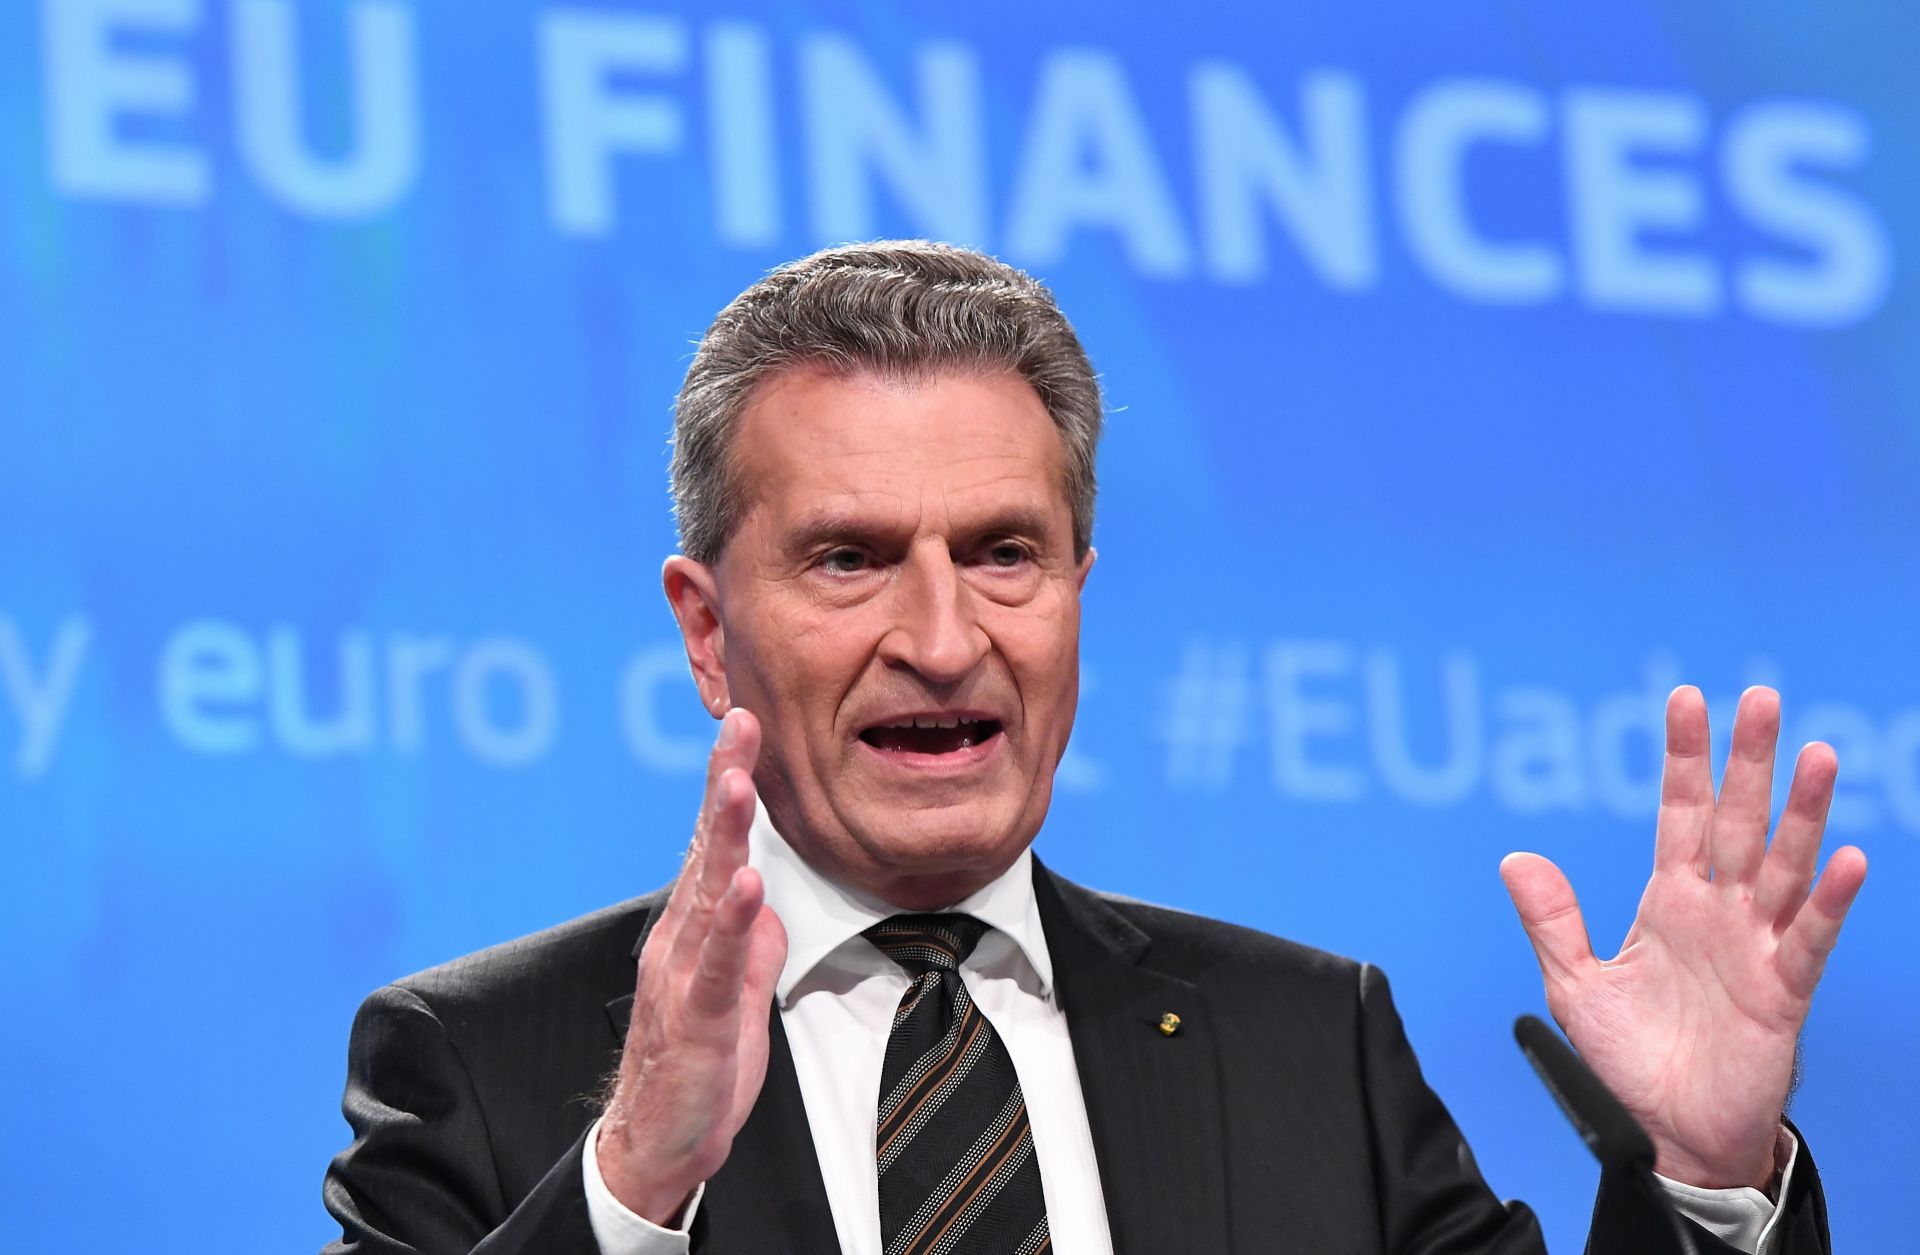 European Union Budget Commissioner Gunther Oettinger speaks in Brussels on June 28, 2017.